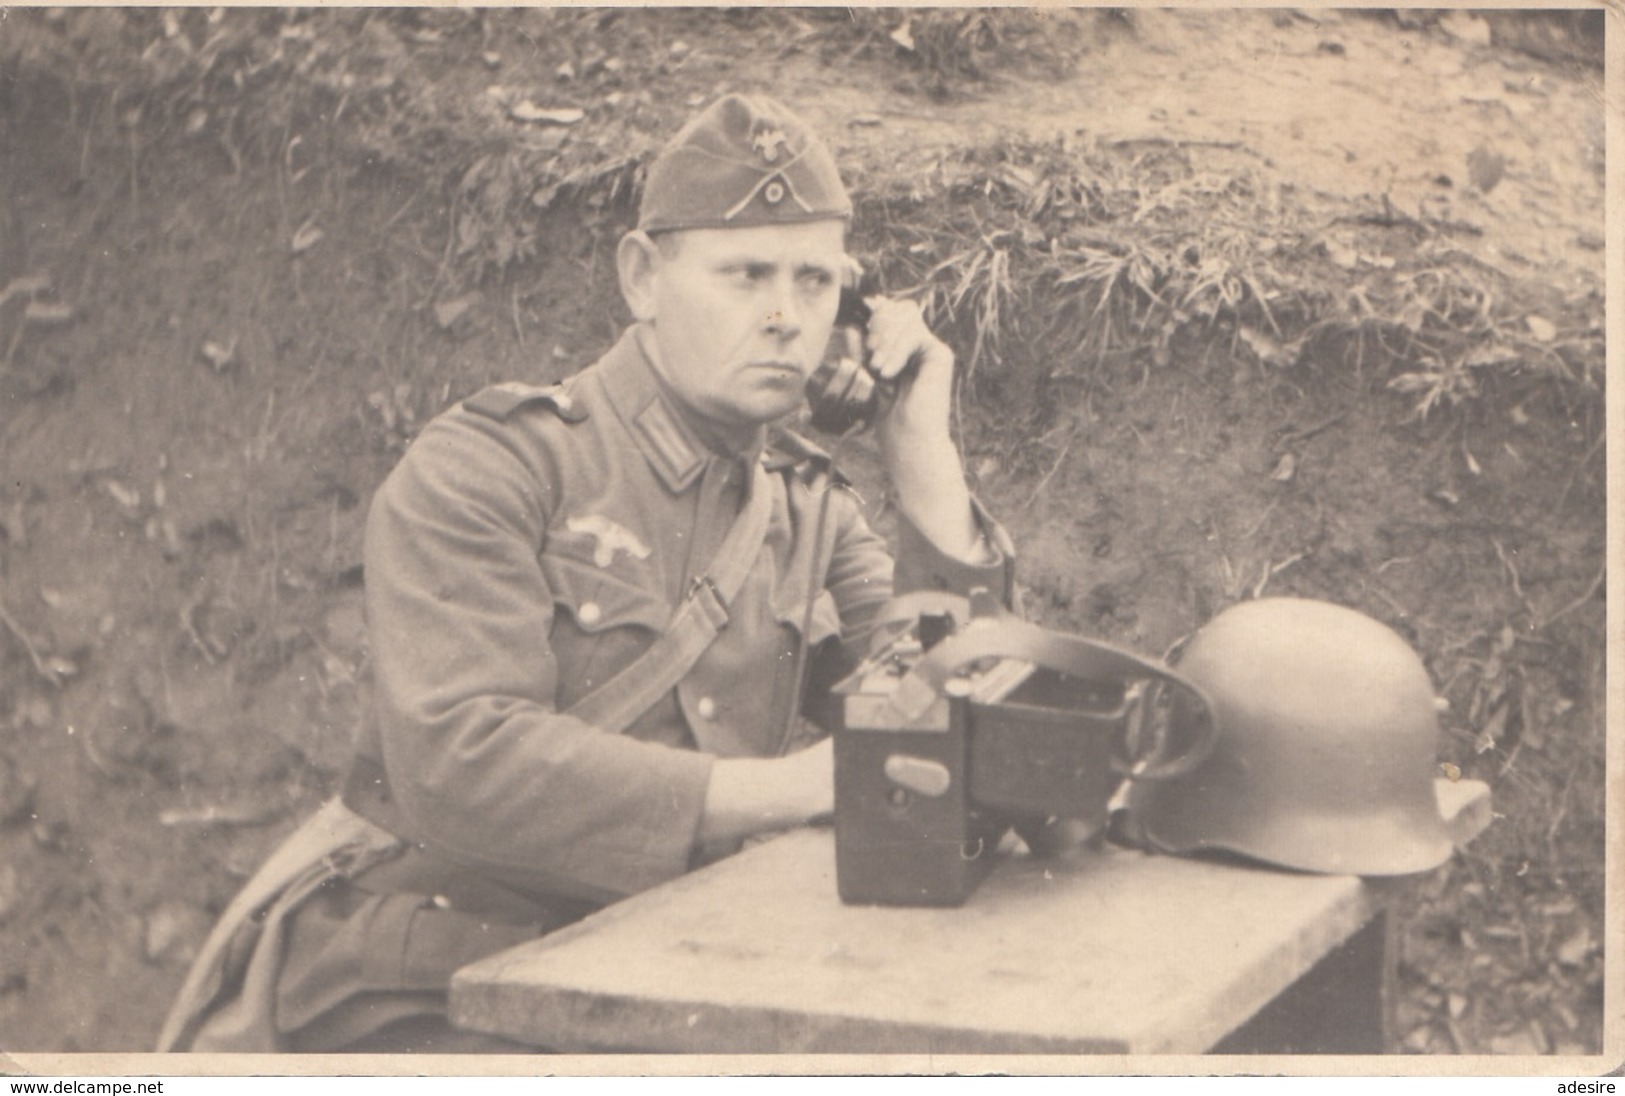 1943? - FUNKER Mit Stahlhelm Und Funkgerät Im Feld - Orig. Fotokarte, Format Ca.13 X 8 Cm - Krieg, Militär